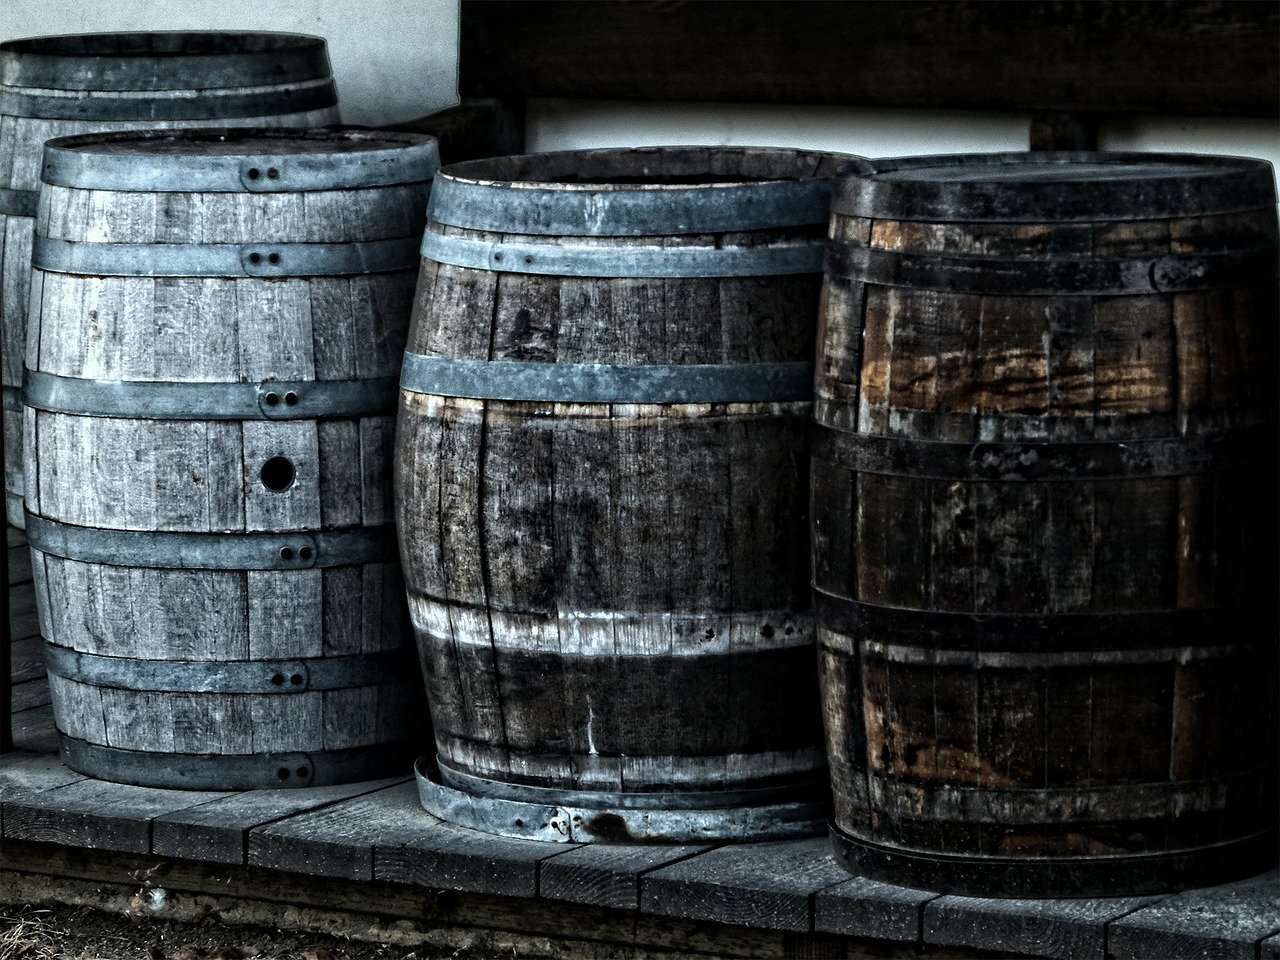 Four wine barrels